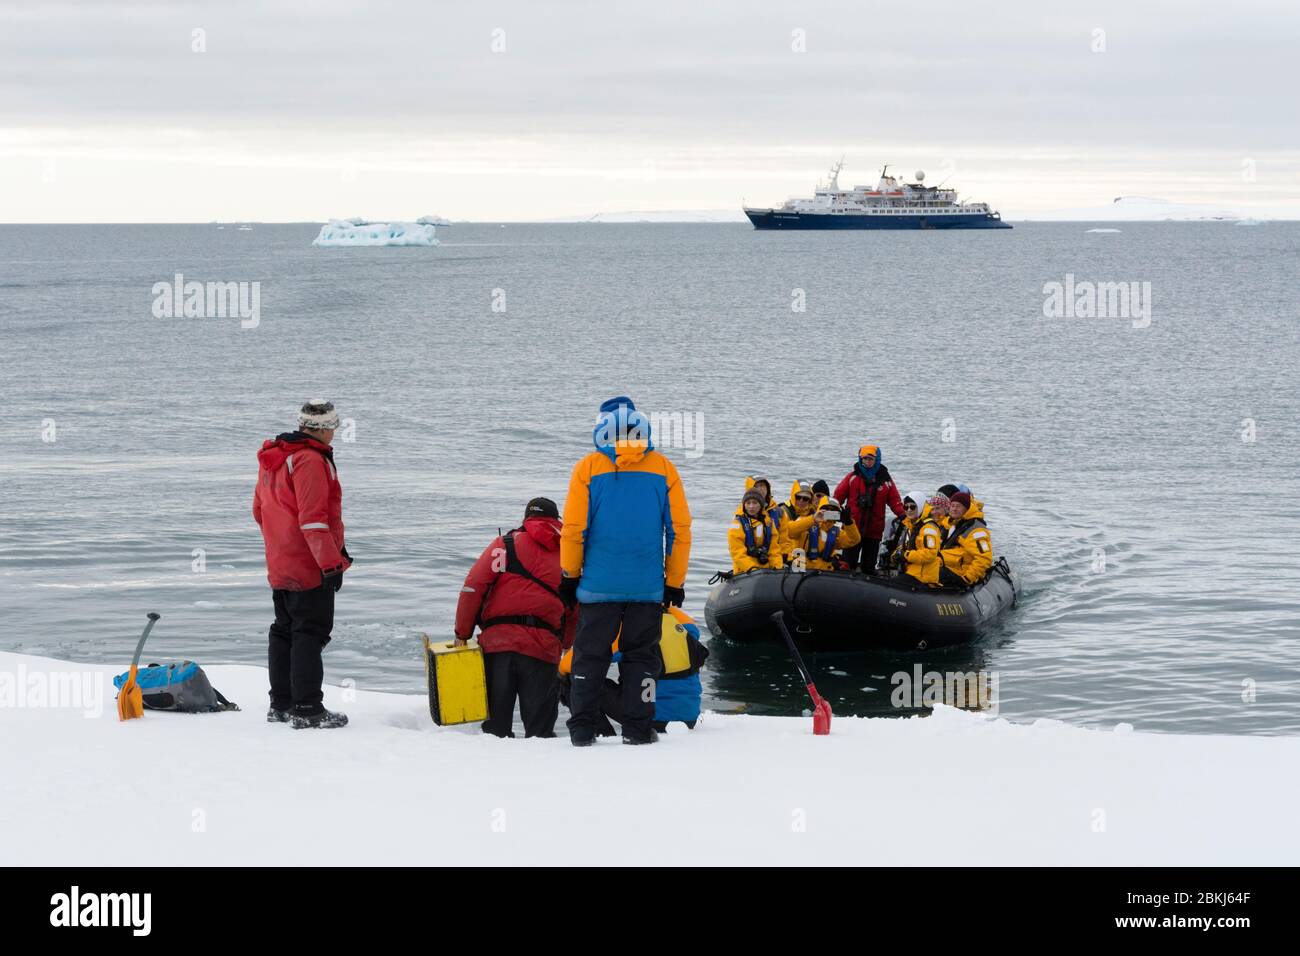 Tourist from Ocean Adventurer cruise ship landing in Wahlbergoya, Hinlopen Strait, beetween Nordaustlandet and Spitsbergen, Svalbard Islands, Norway Stock Photo